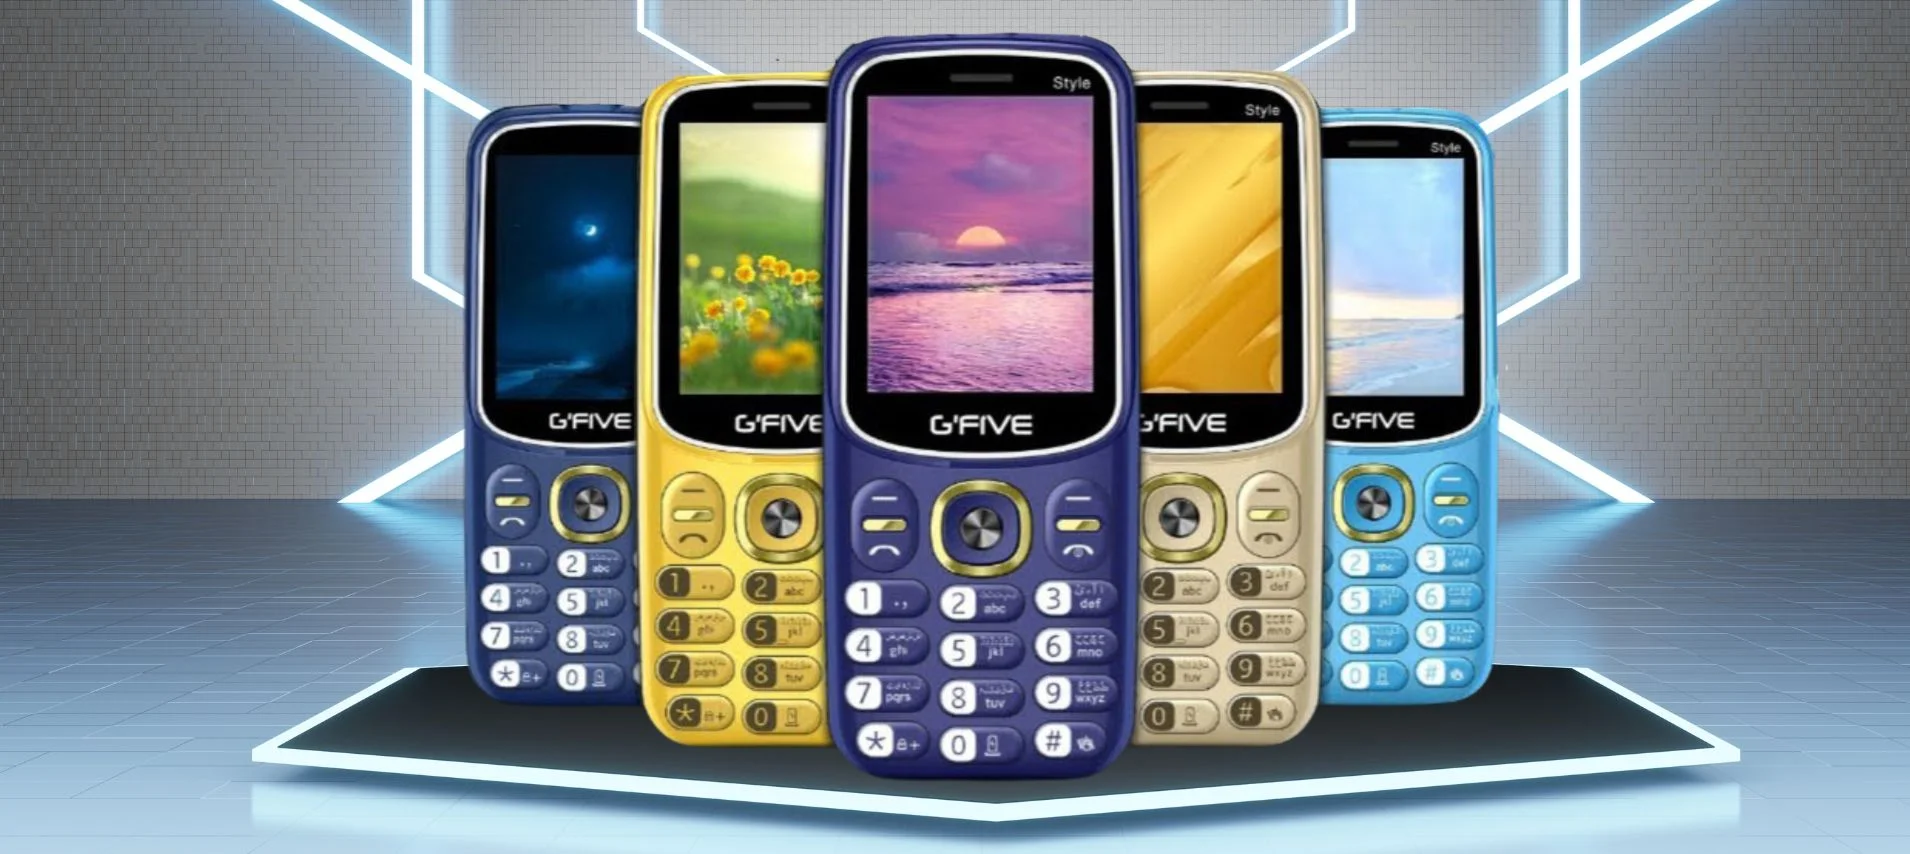 gfive keypad mobile phones